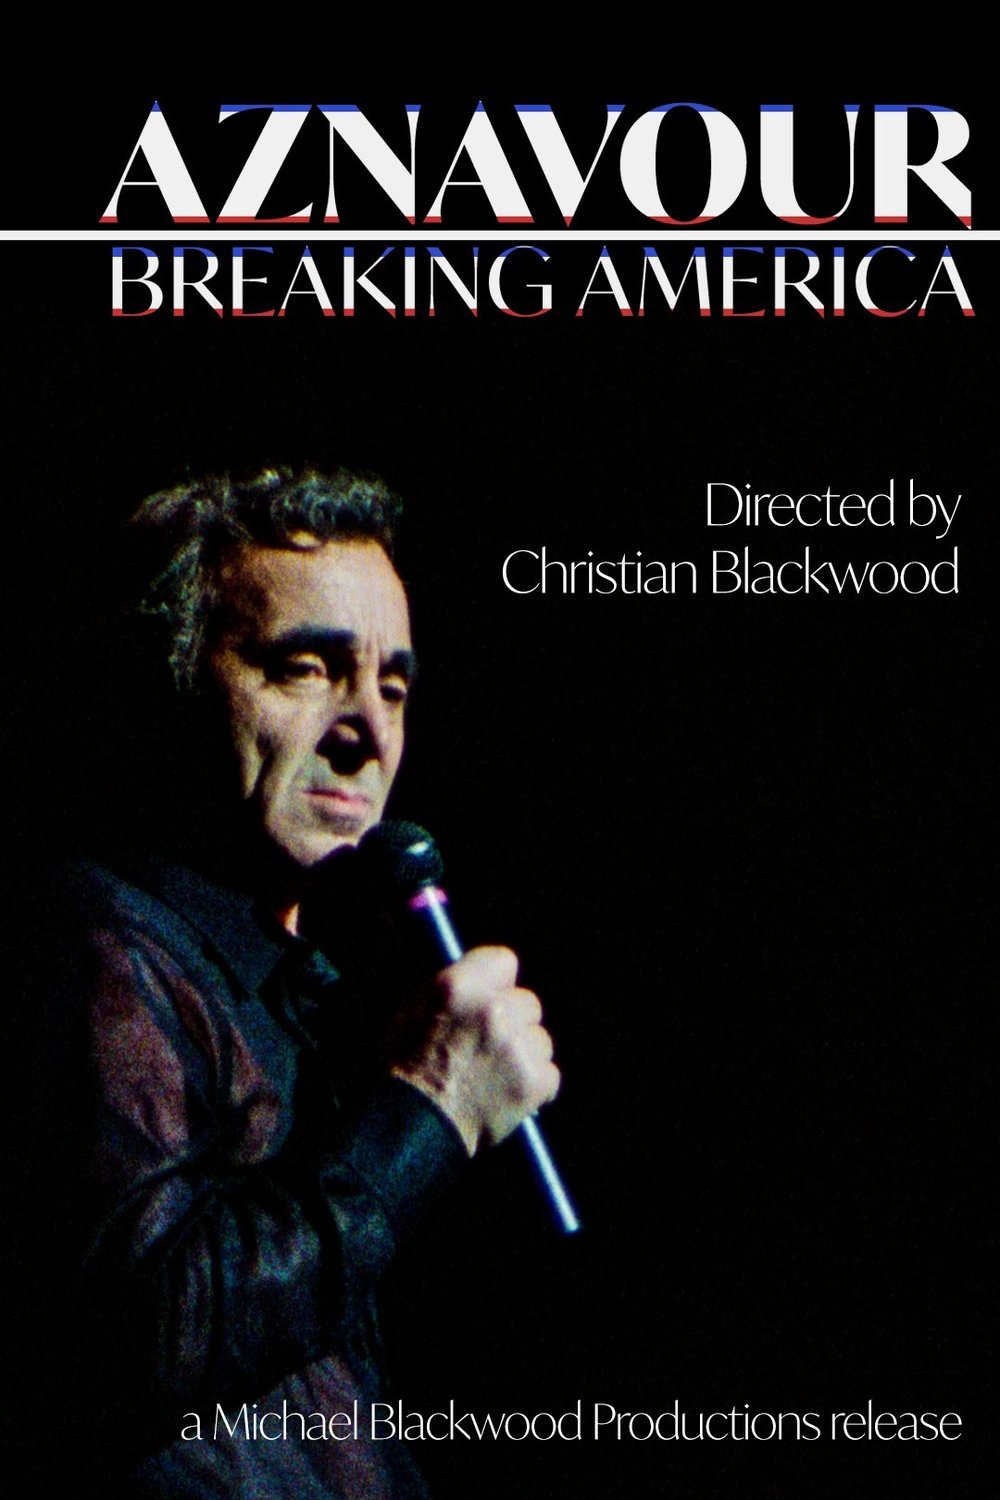 L'affiche du film Aznavour: Breaking America